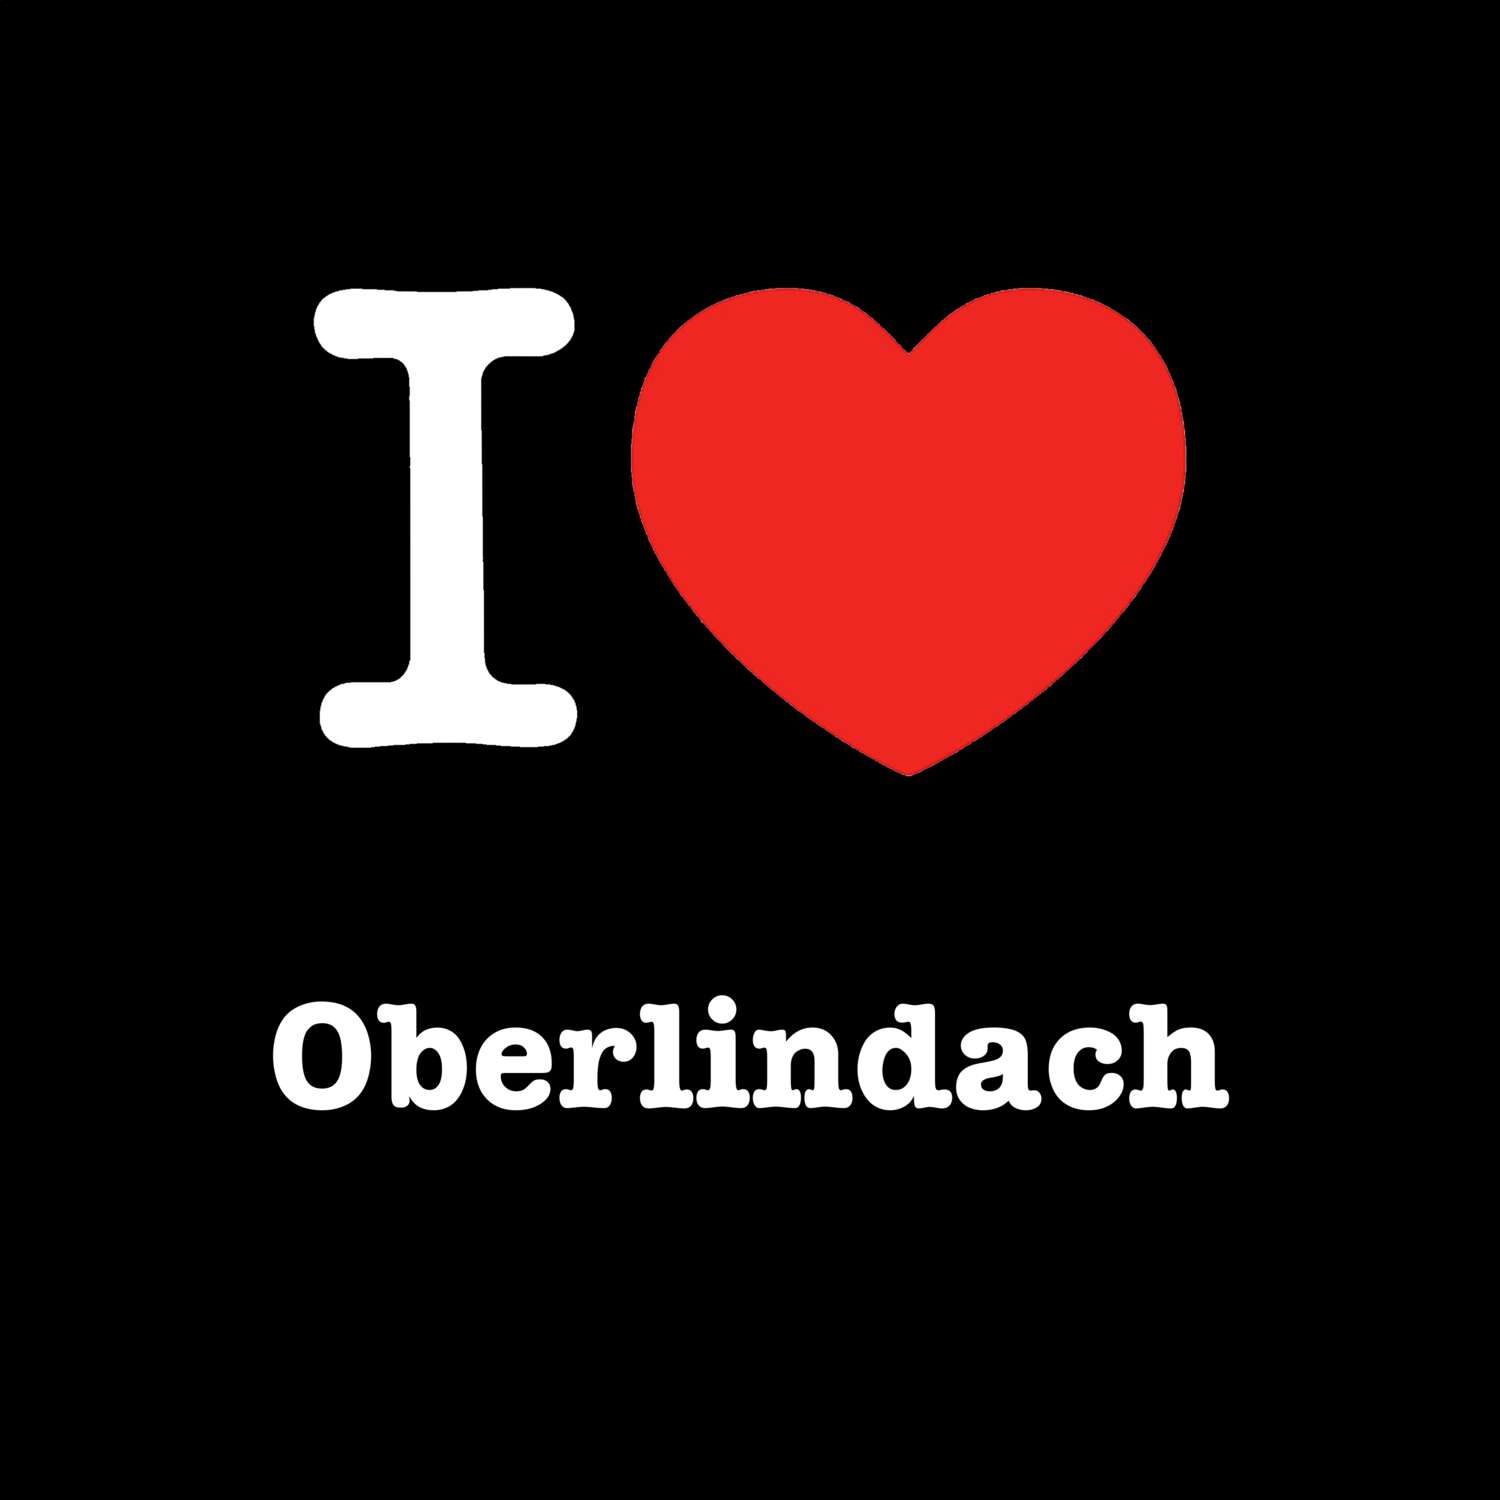 Oberlindach T-Shirt »I love«